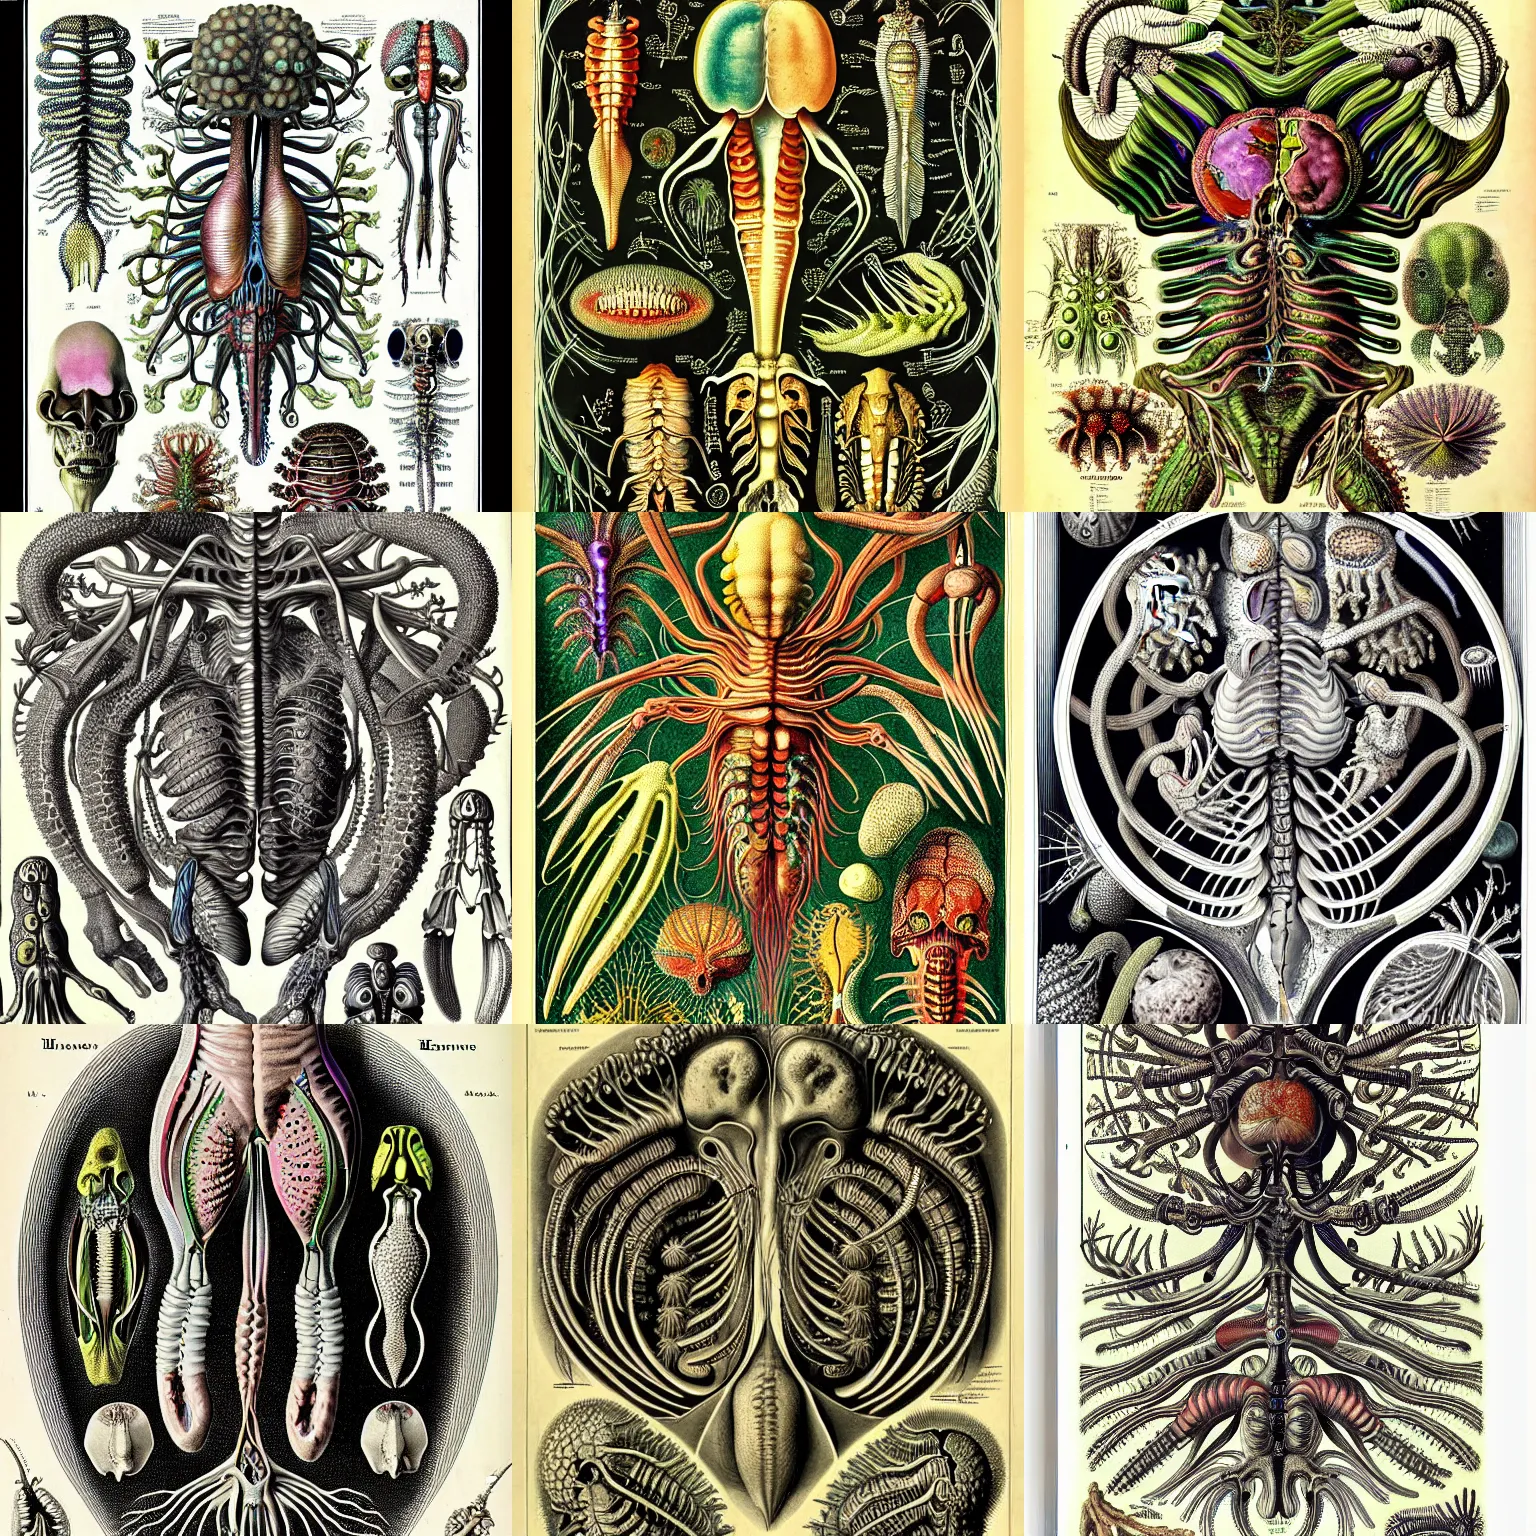 Prompt: alien nature anatomy by ernst haeckel, masterpiece, vivid, very detailed